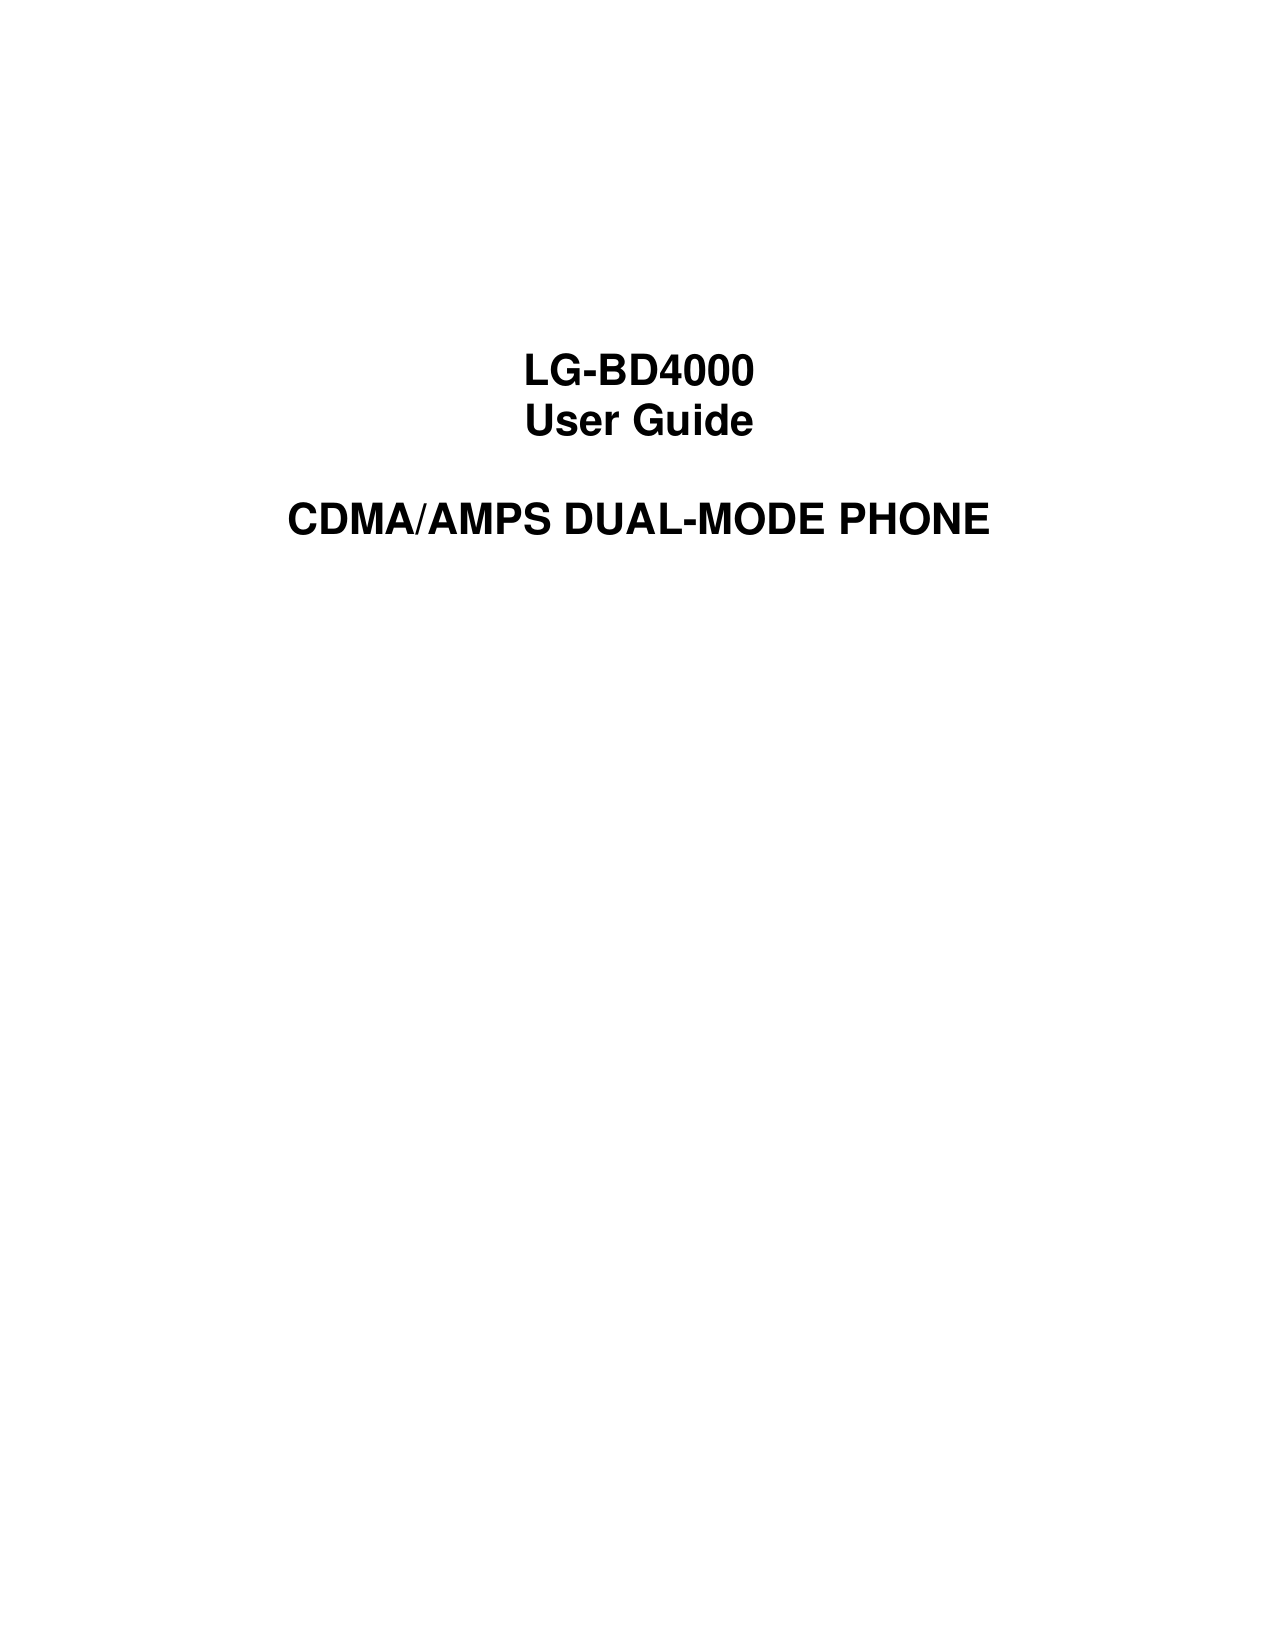    LG-BD4000 User Guide  CDMA/AMPS DUAL-MODE PHONE                           